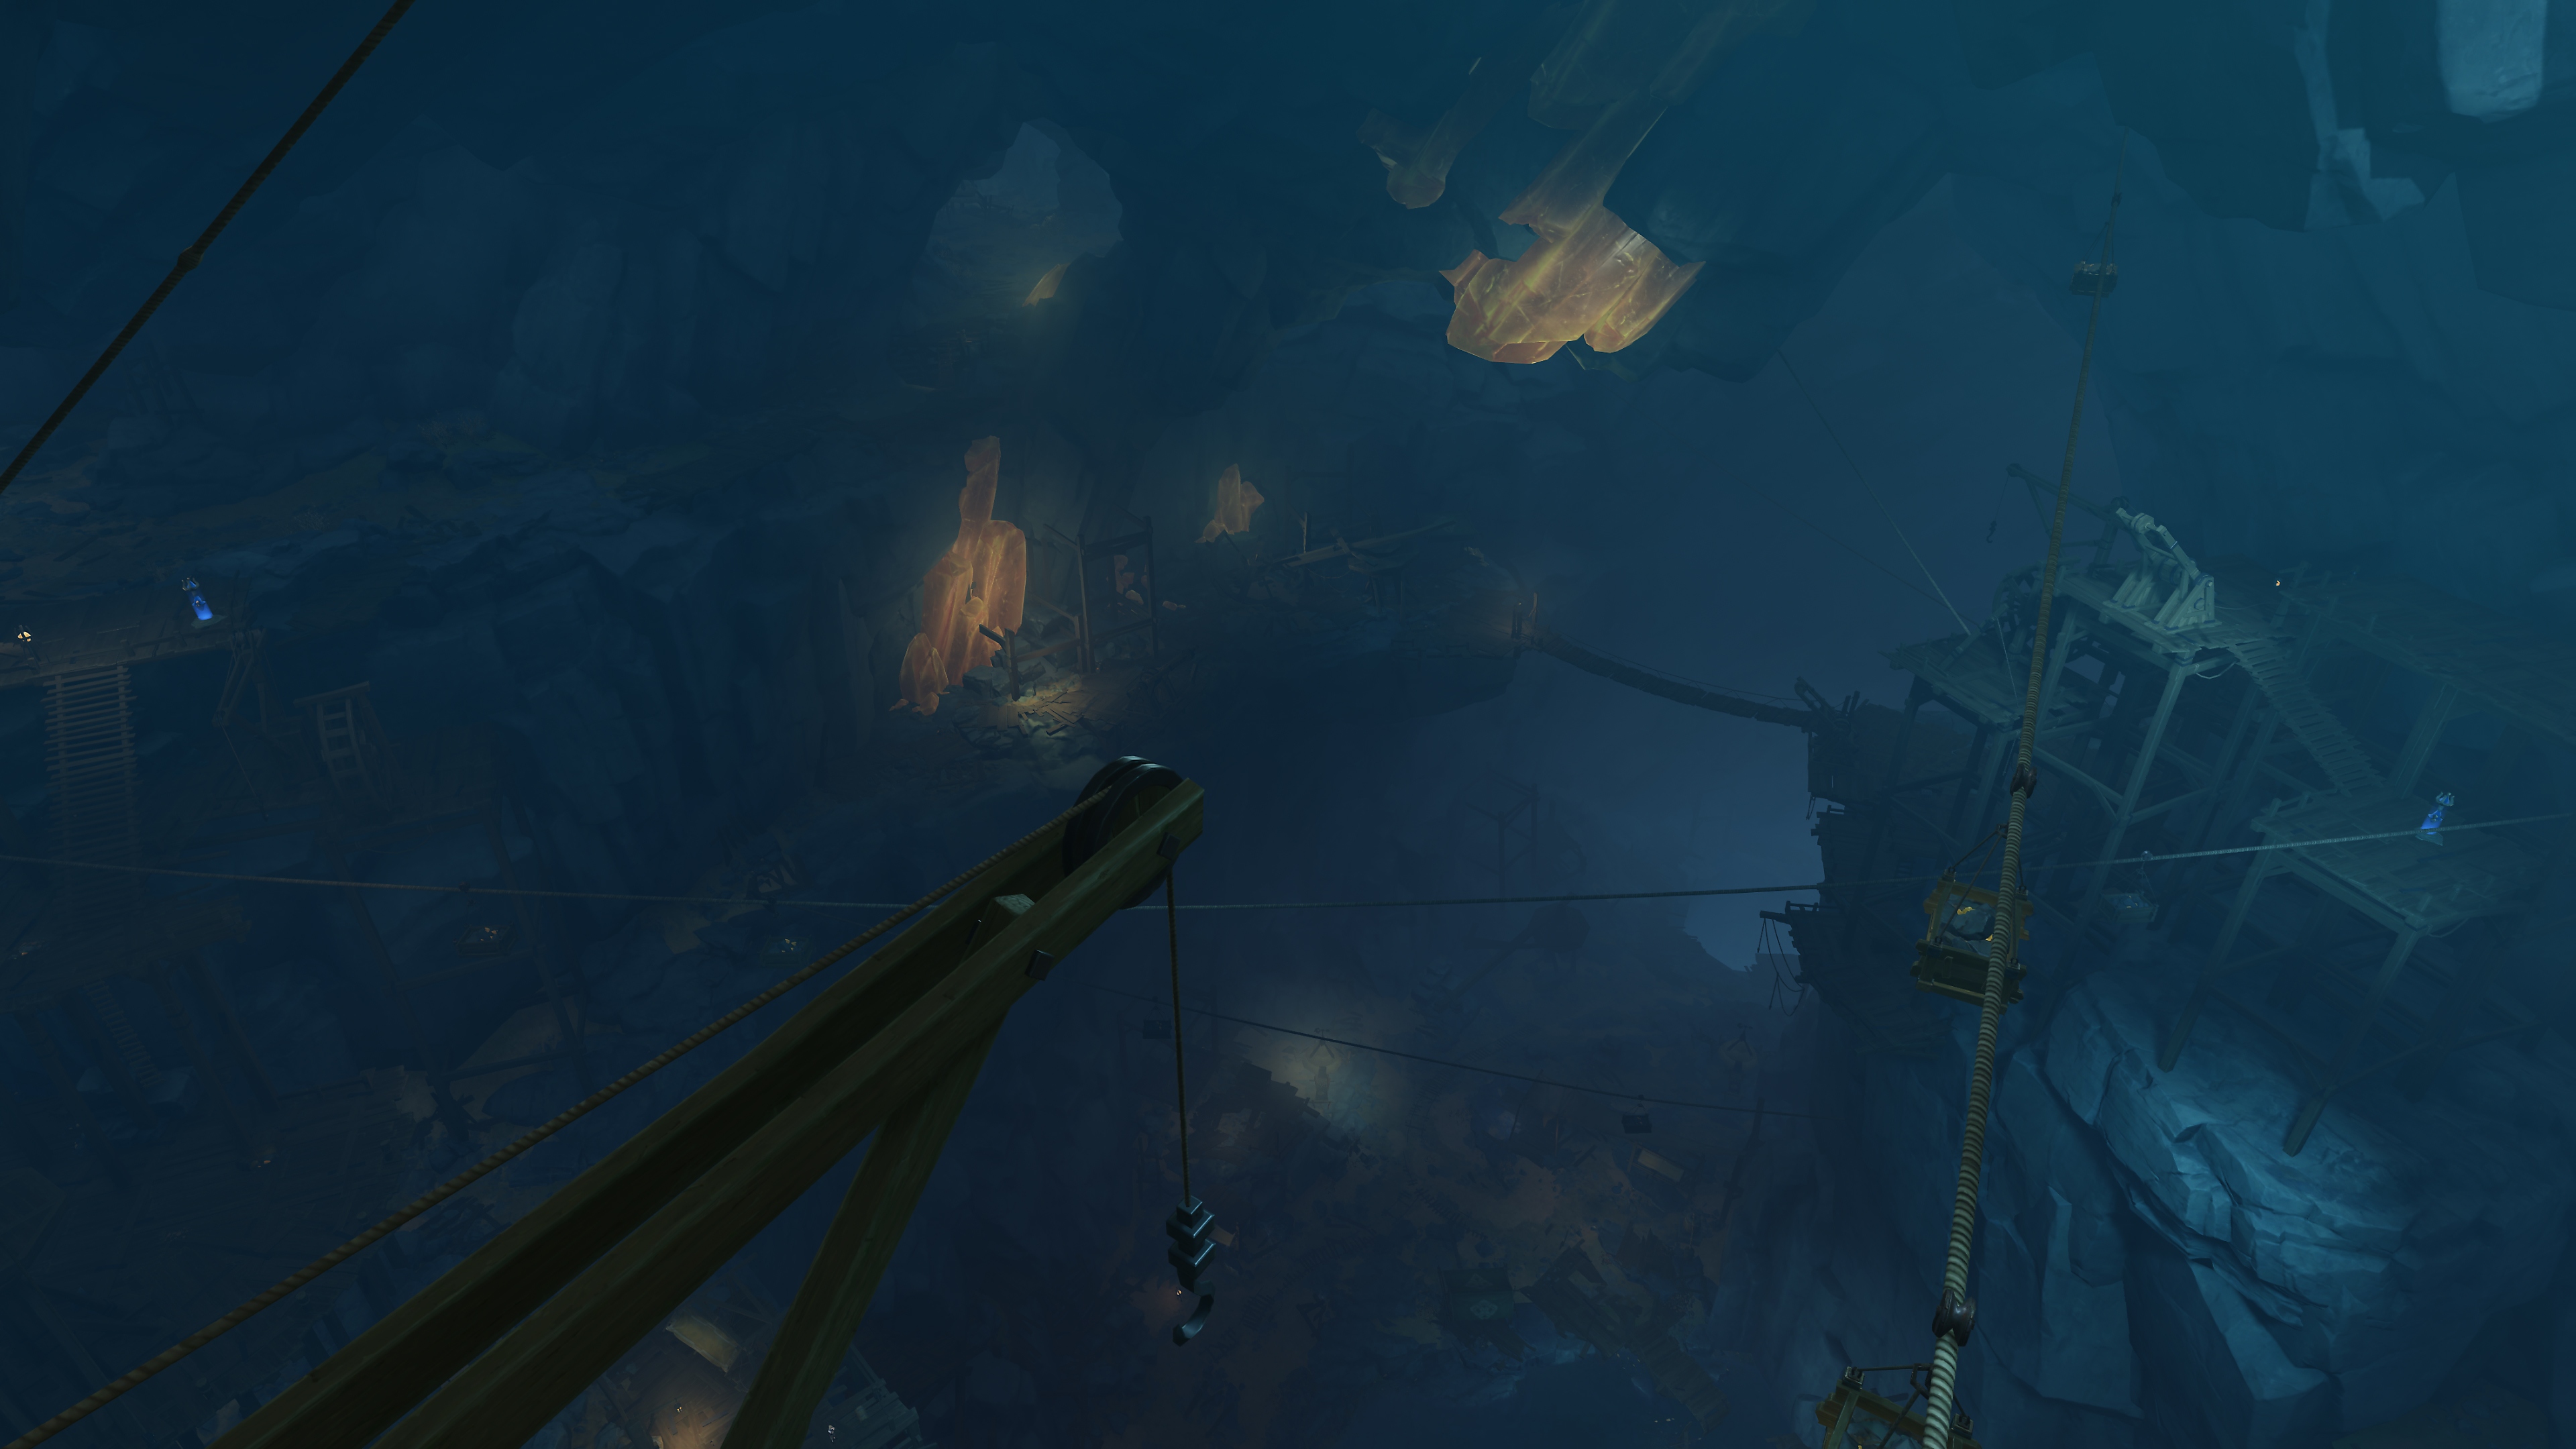 Genshin Impact: 2.6 update screenshot showing a dark, underground mine scene with glowing crystals set in the rocks